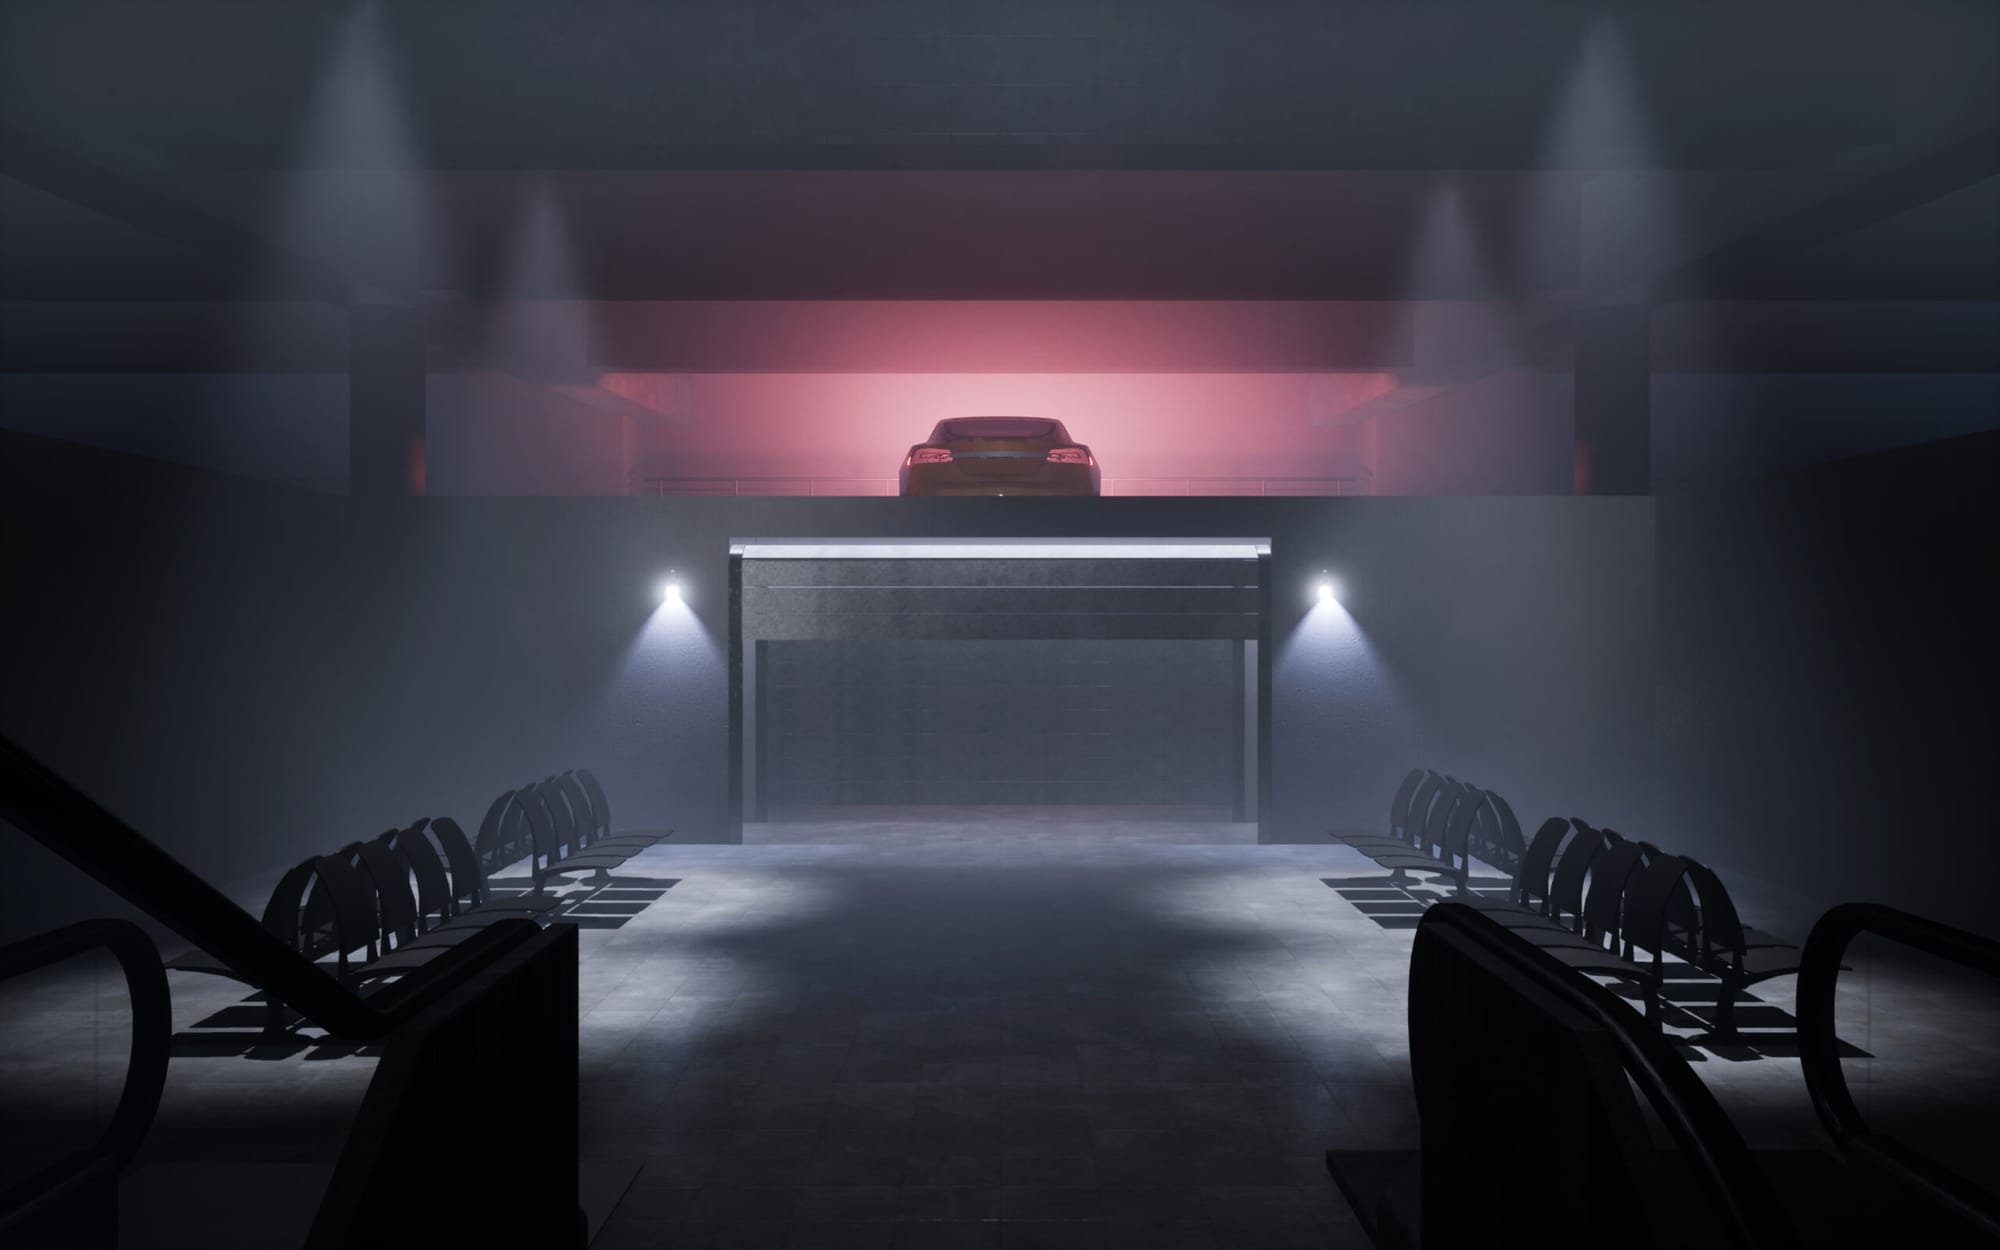 La sala d'attesa di un garage in stile vaprowave. NOX, un'opera di Lawrence Lek.